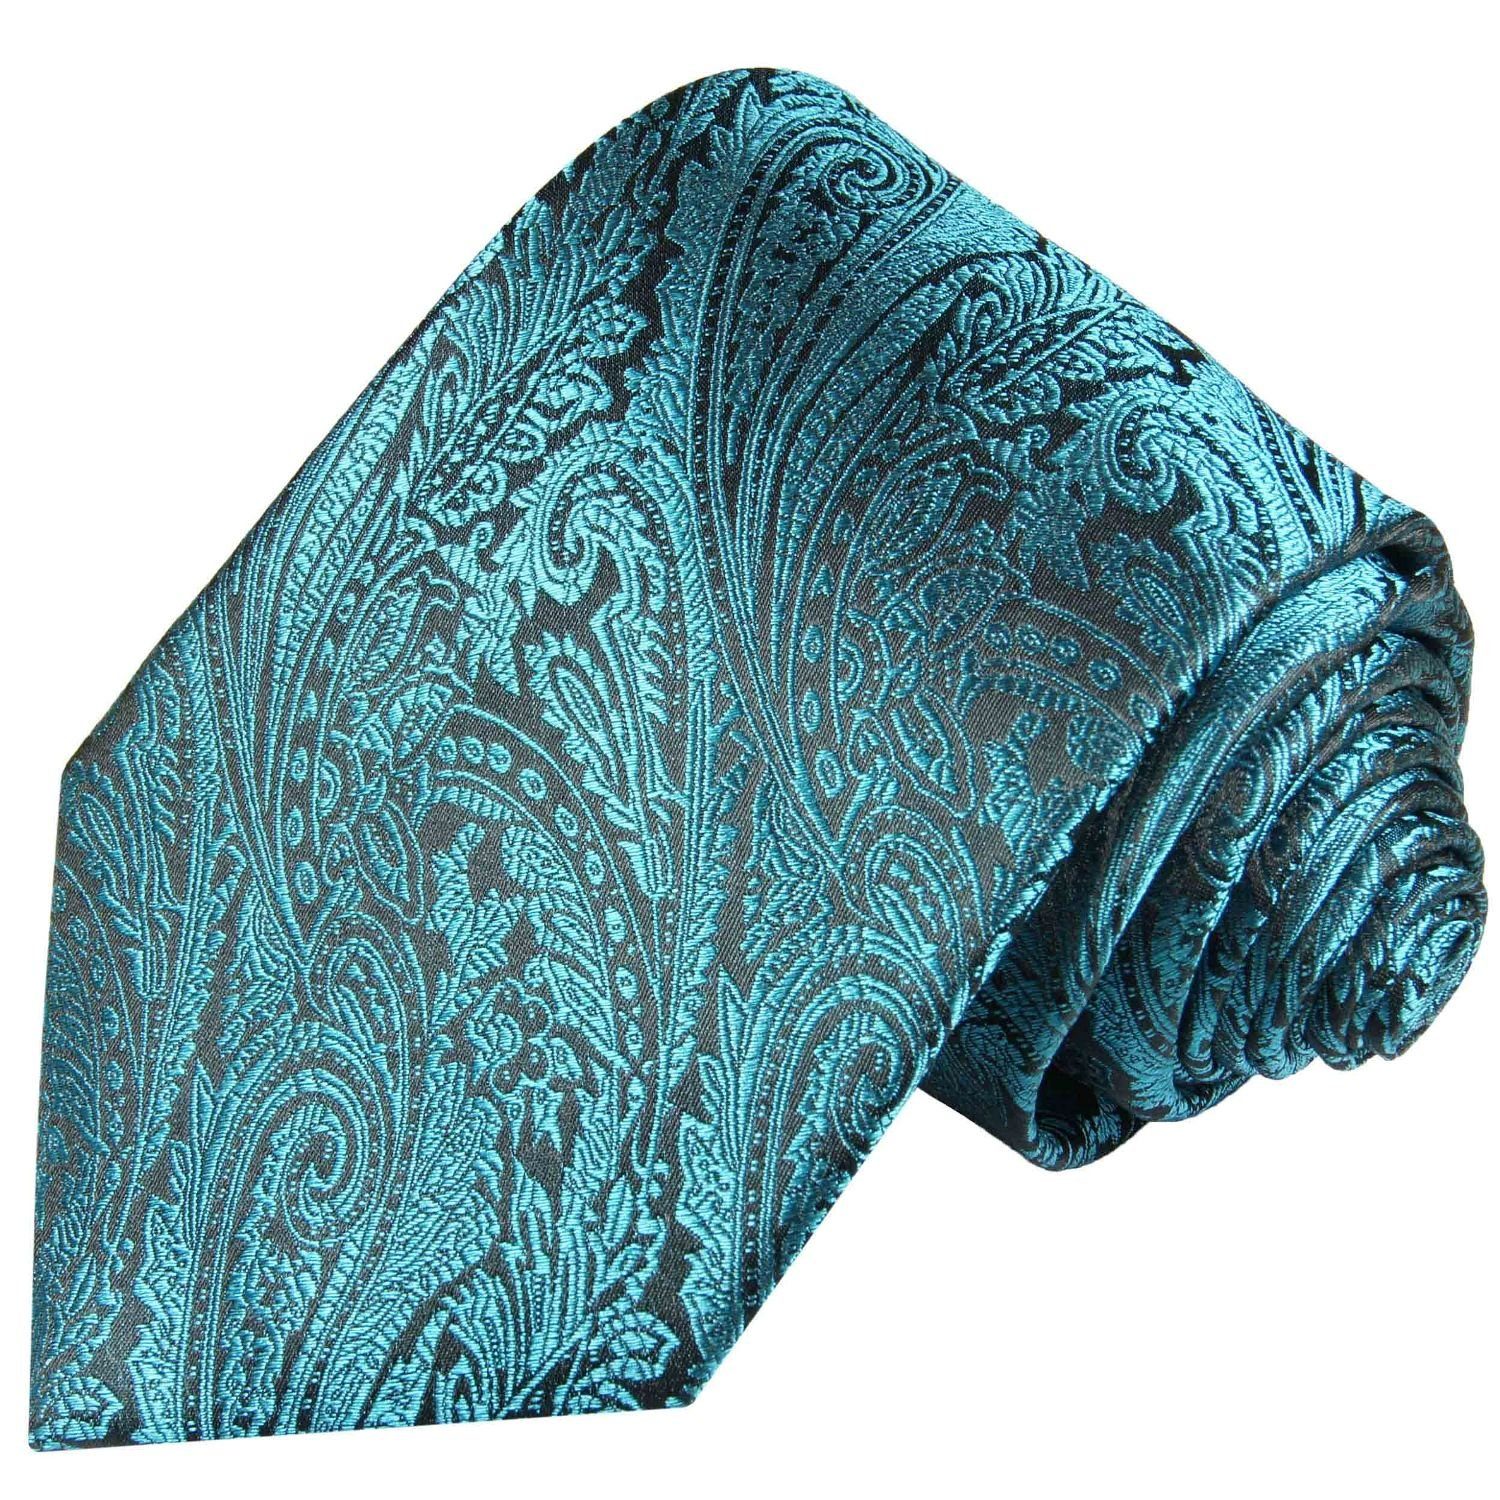 Paul Malone Krawatte Herren Seidenkrawatte Schlips modern paisley floral 100% Seide Breit (8cm), aqua blau 373